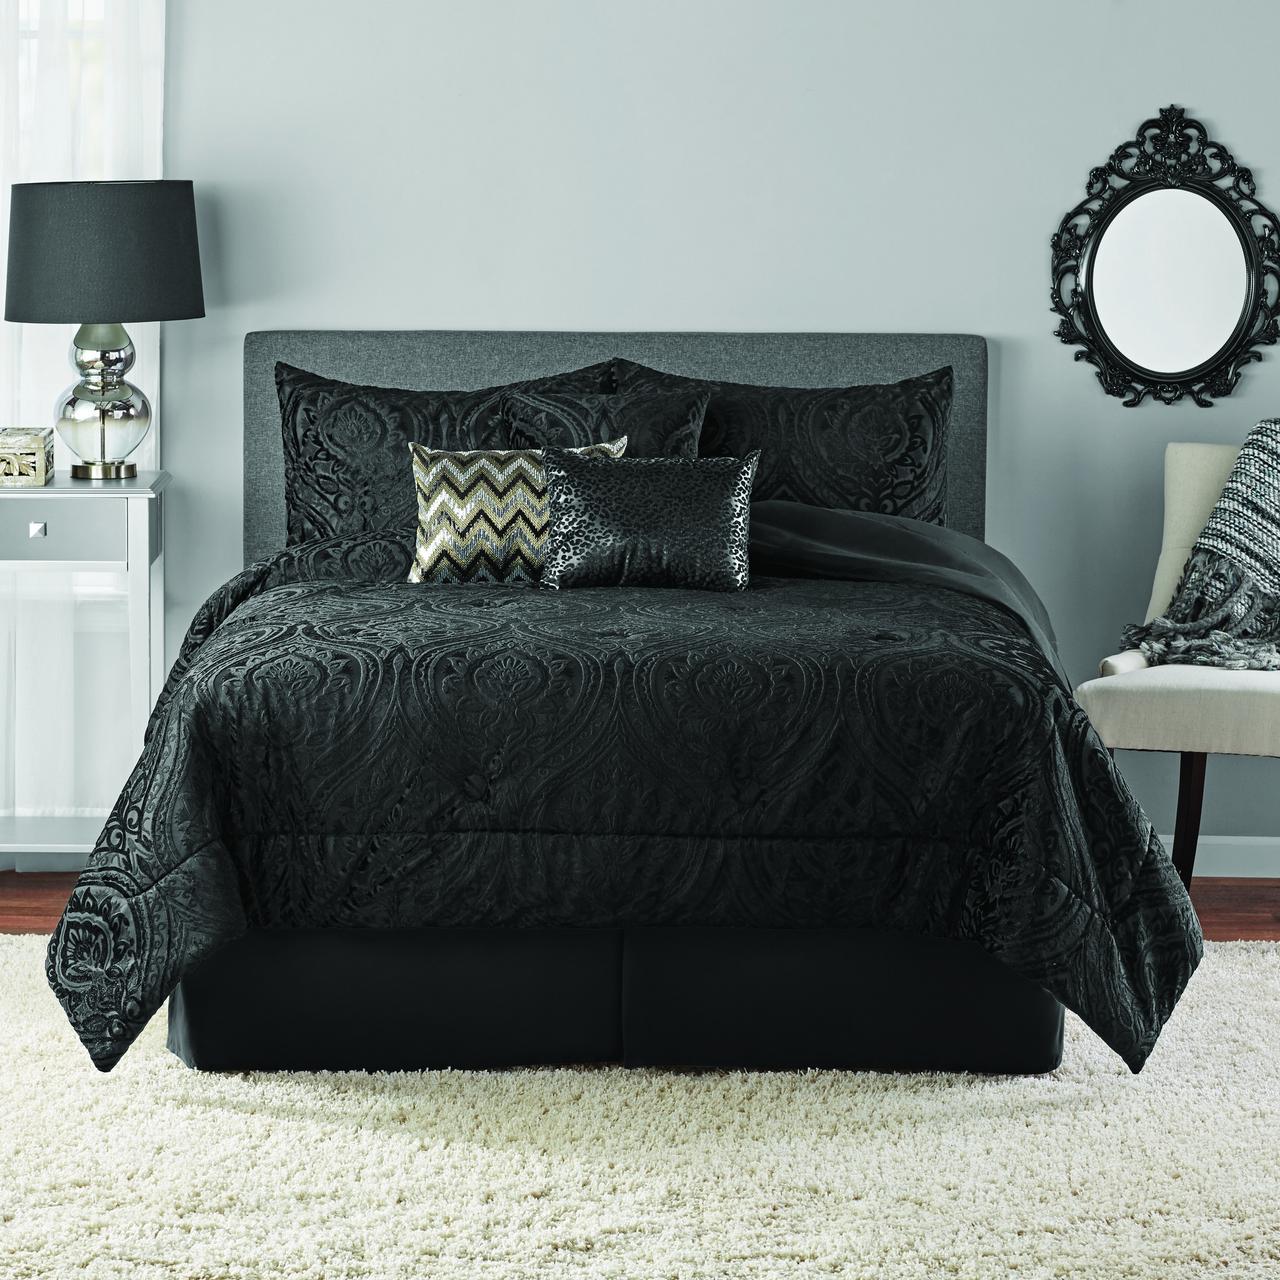 Mainstays 7-Piece Black Cougar Ogee Woven Comforter Set, King - image 1 of 6